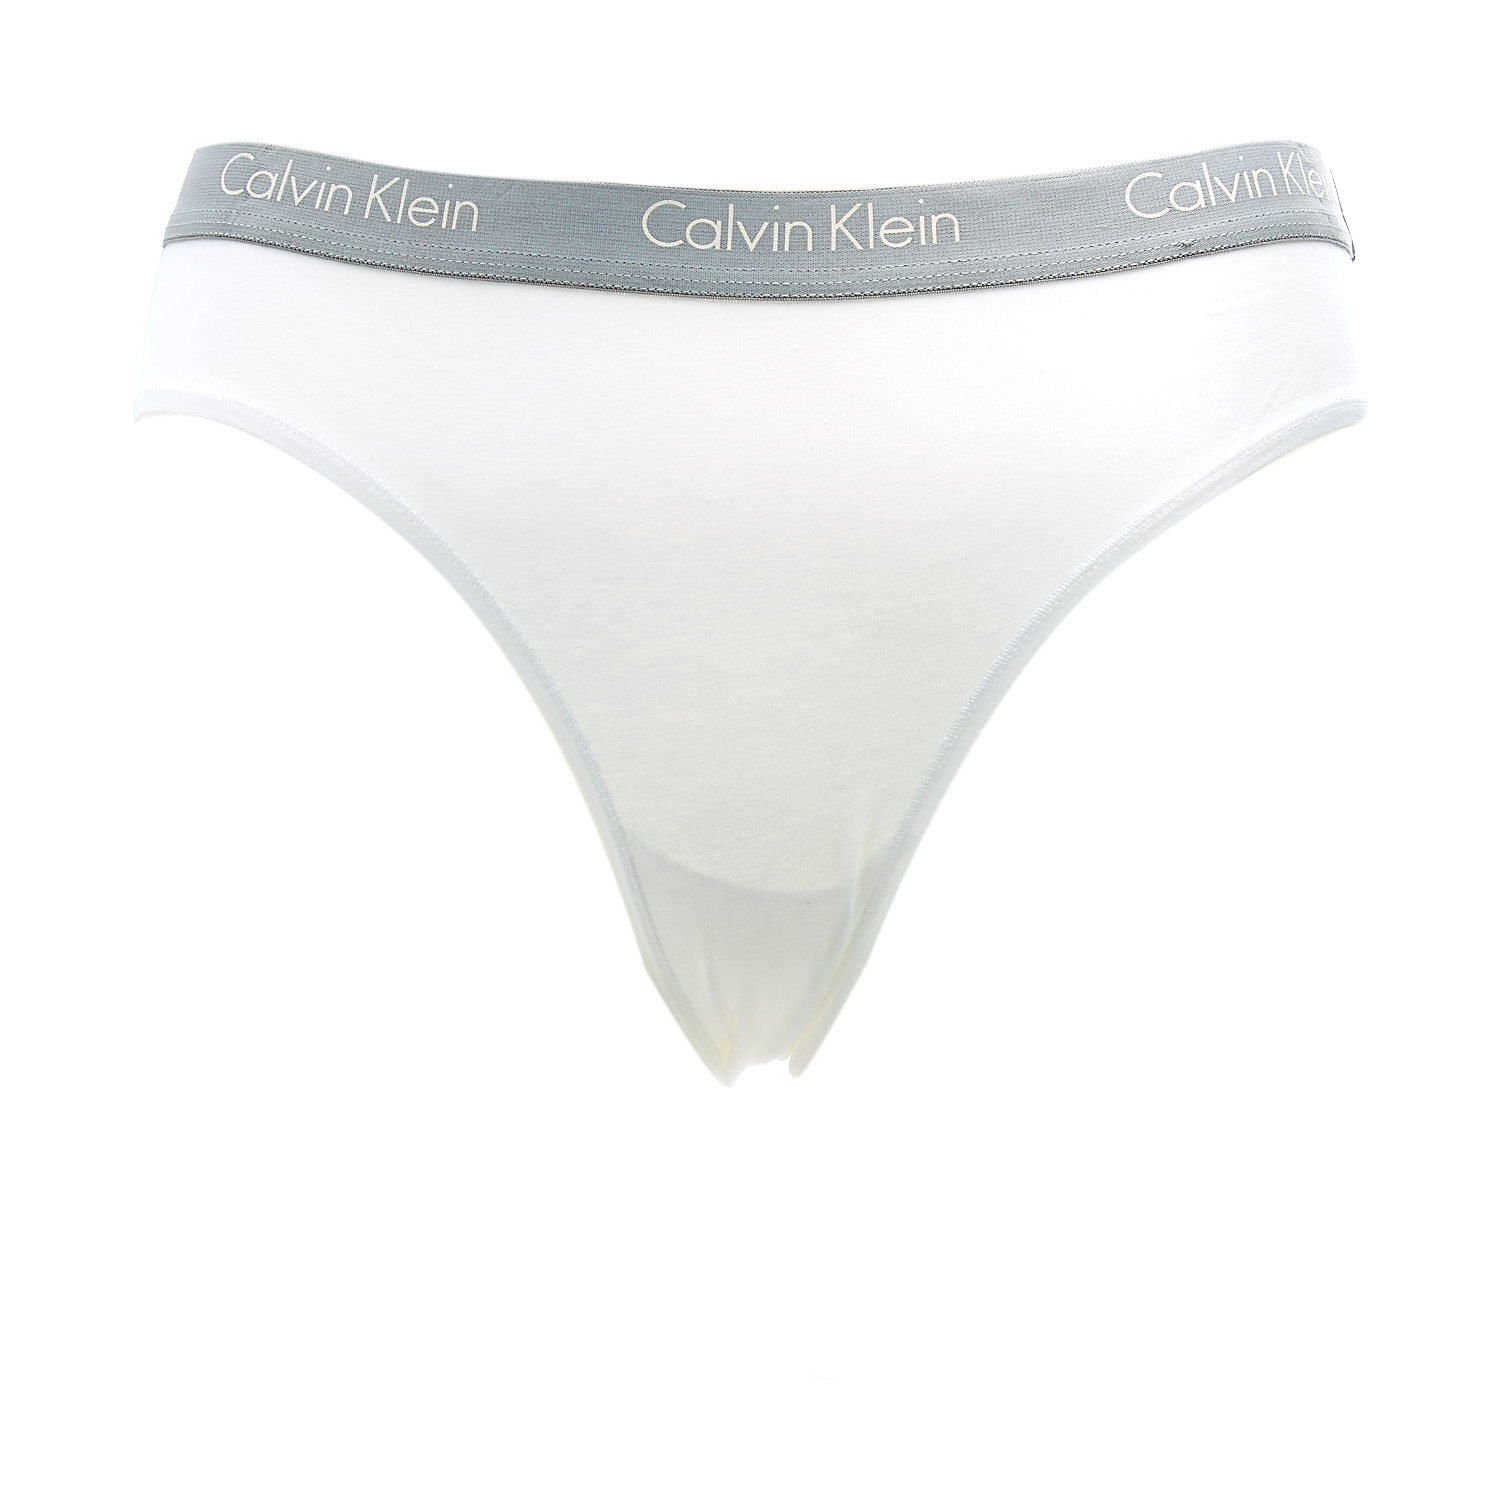 CK UNDERWEAR - Σλιπ Calvin Klein λευκό Γυναικεία/Ρούχα/Εσώρουχα/Σλιπ